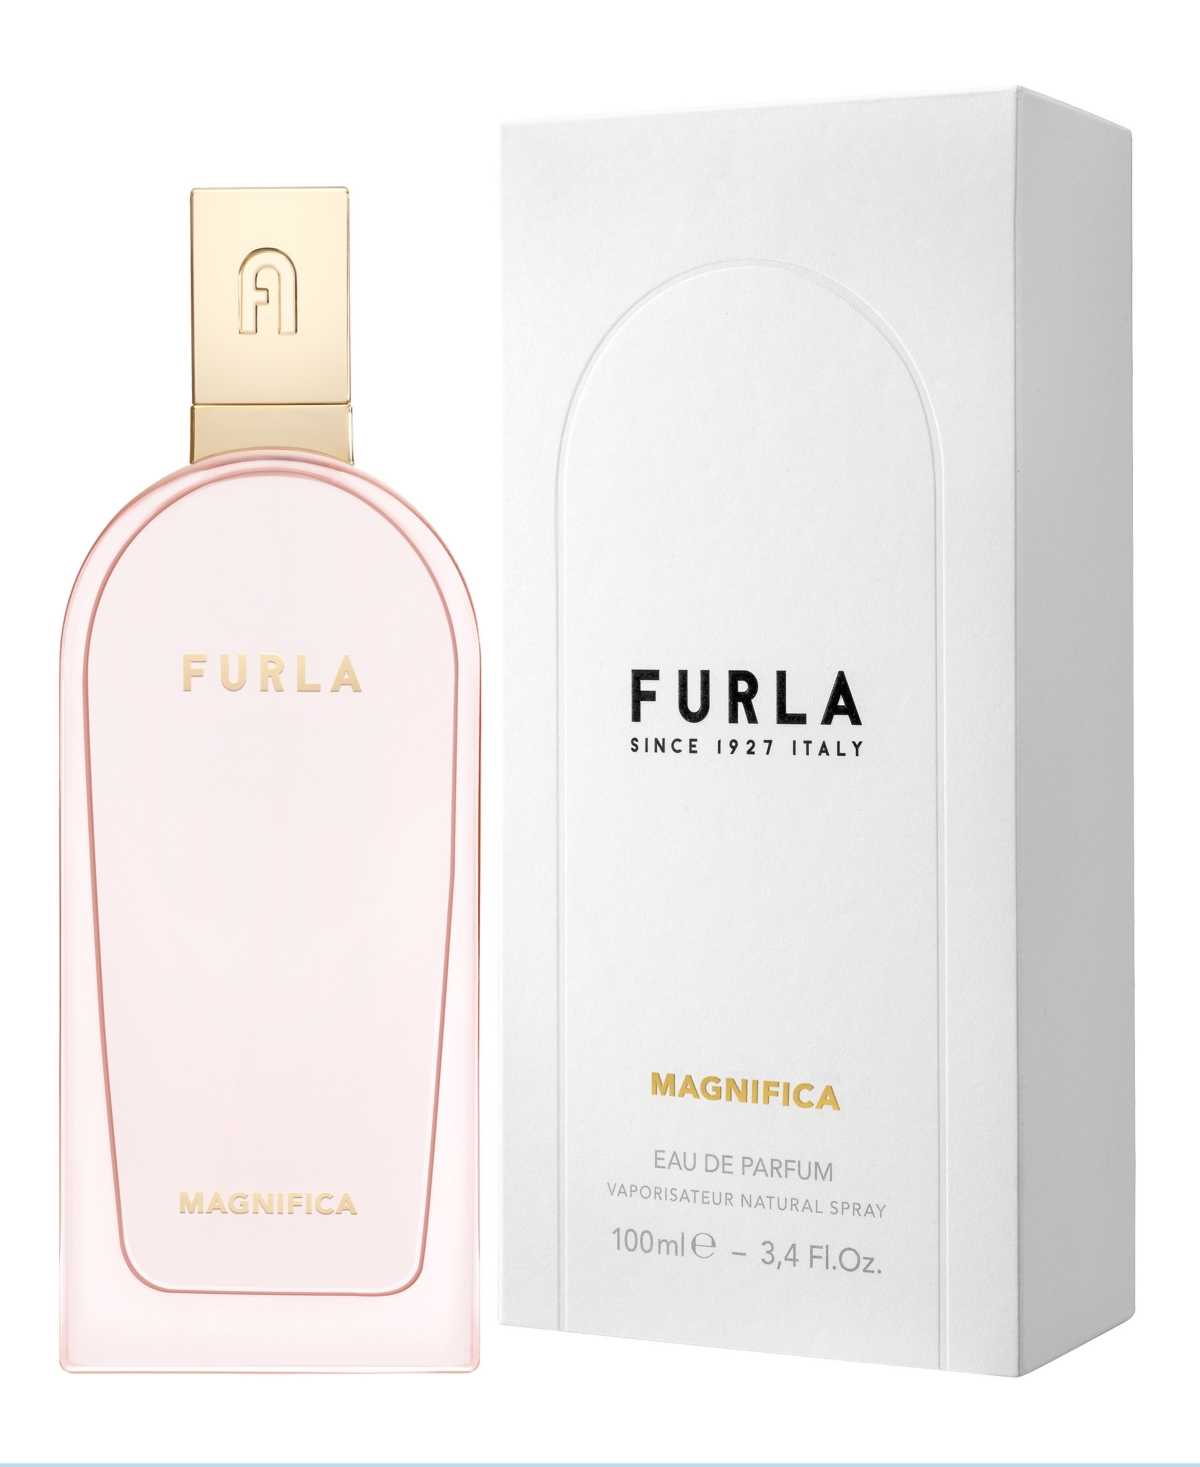 Furla Magnifica Women's Eau De Parfum Spray, 3.4 Fl oz